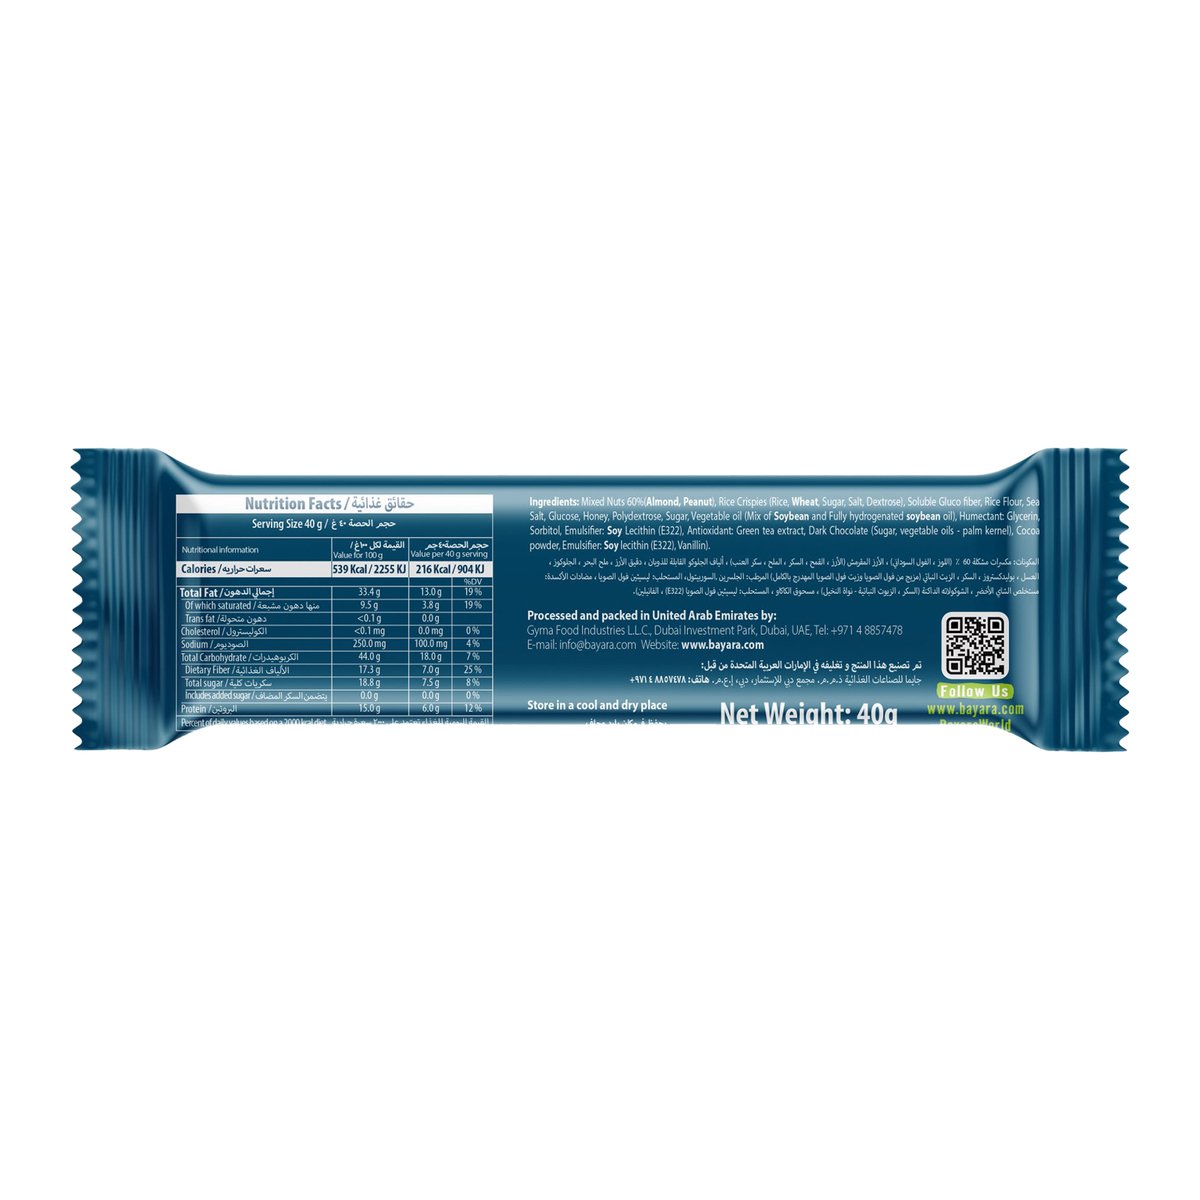 Bayara Dark Chocolate Almond & Sea Salt Energy Bar 40 g